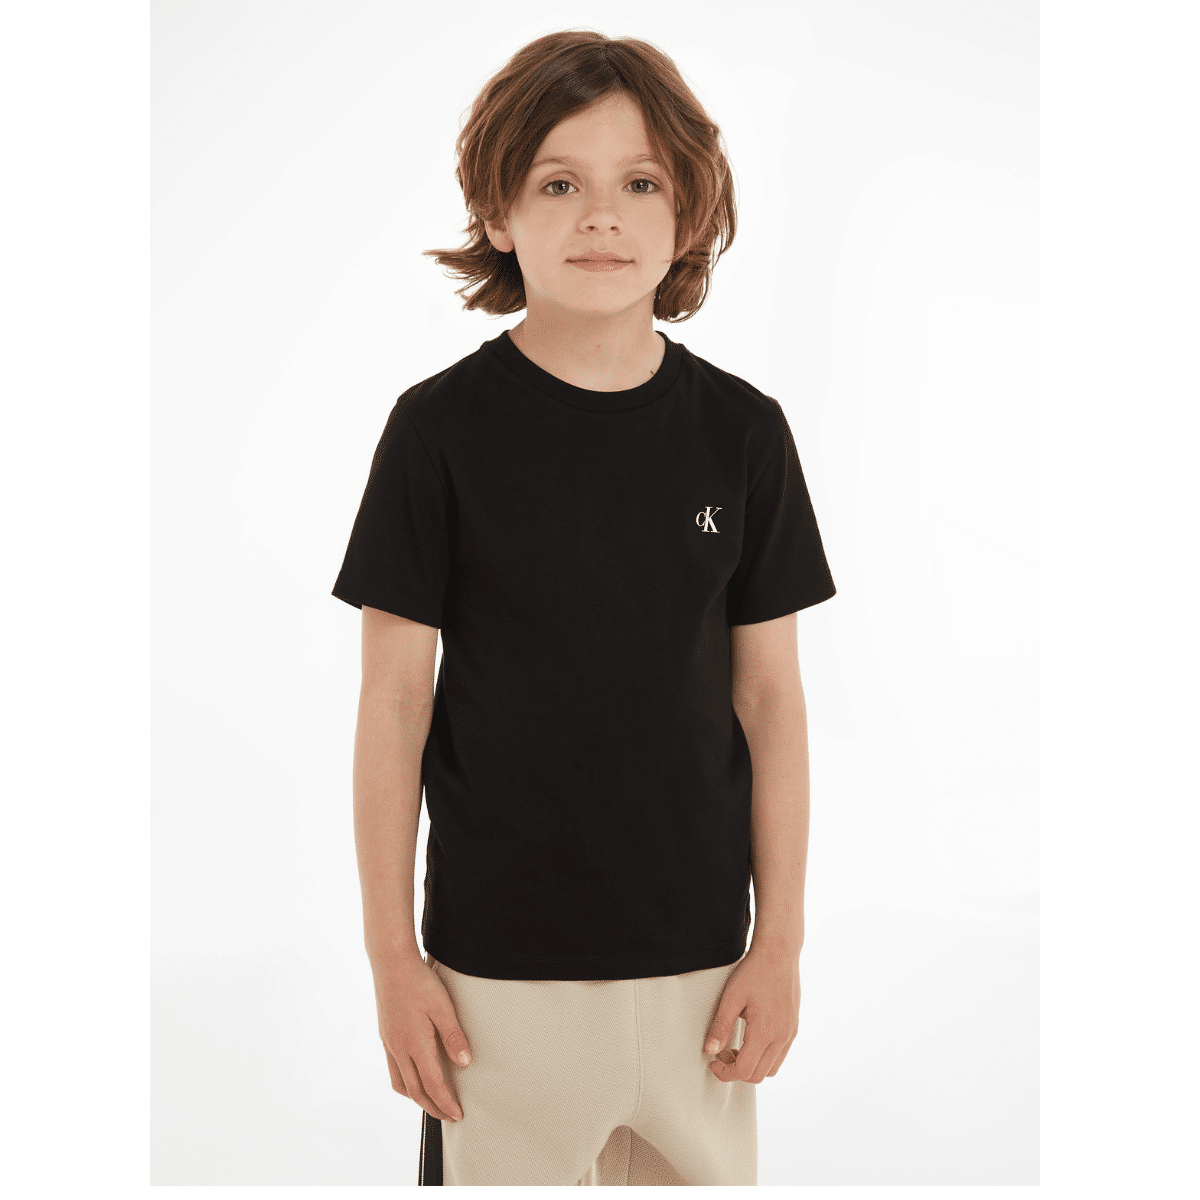 boy model with calvin klein black tshirt